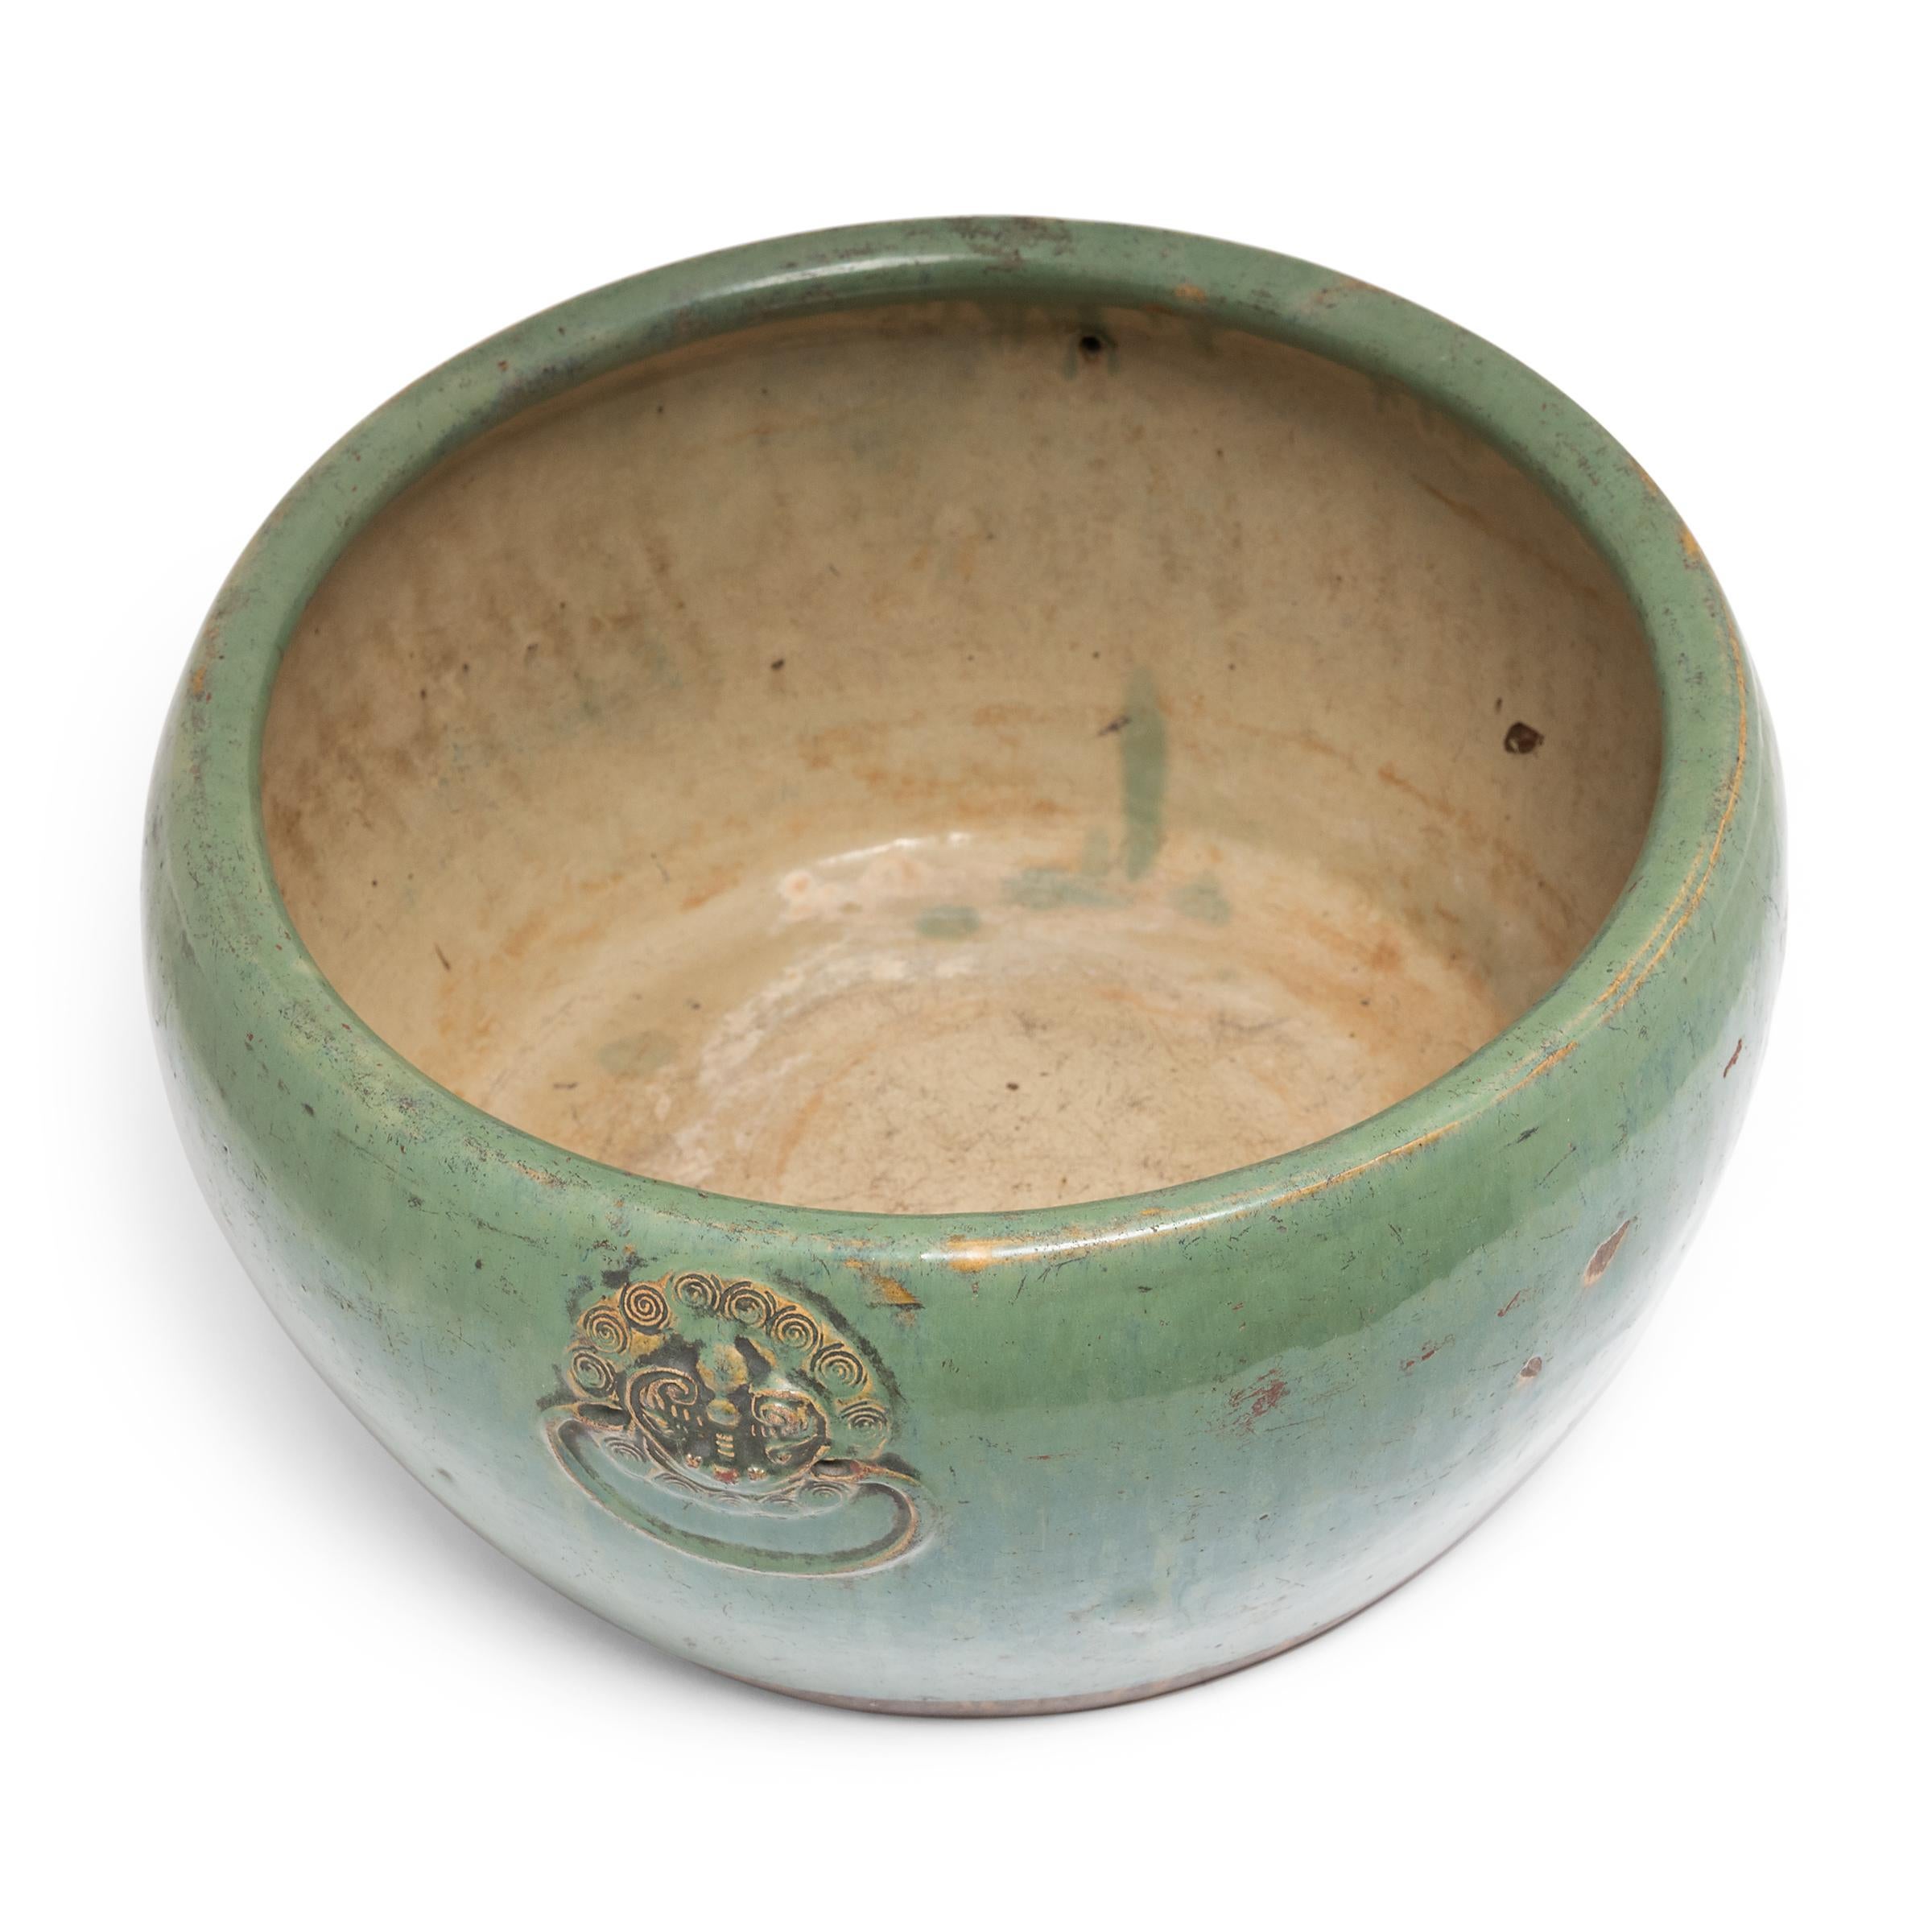 Ceramic Chinese Celadon Green Glazed Fishbowl, c. 1850